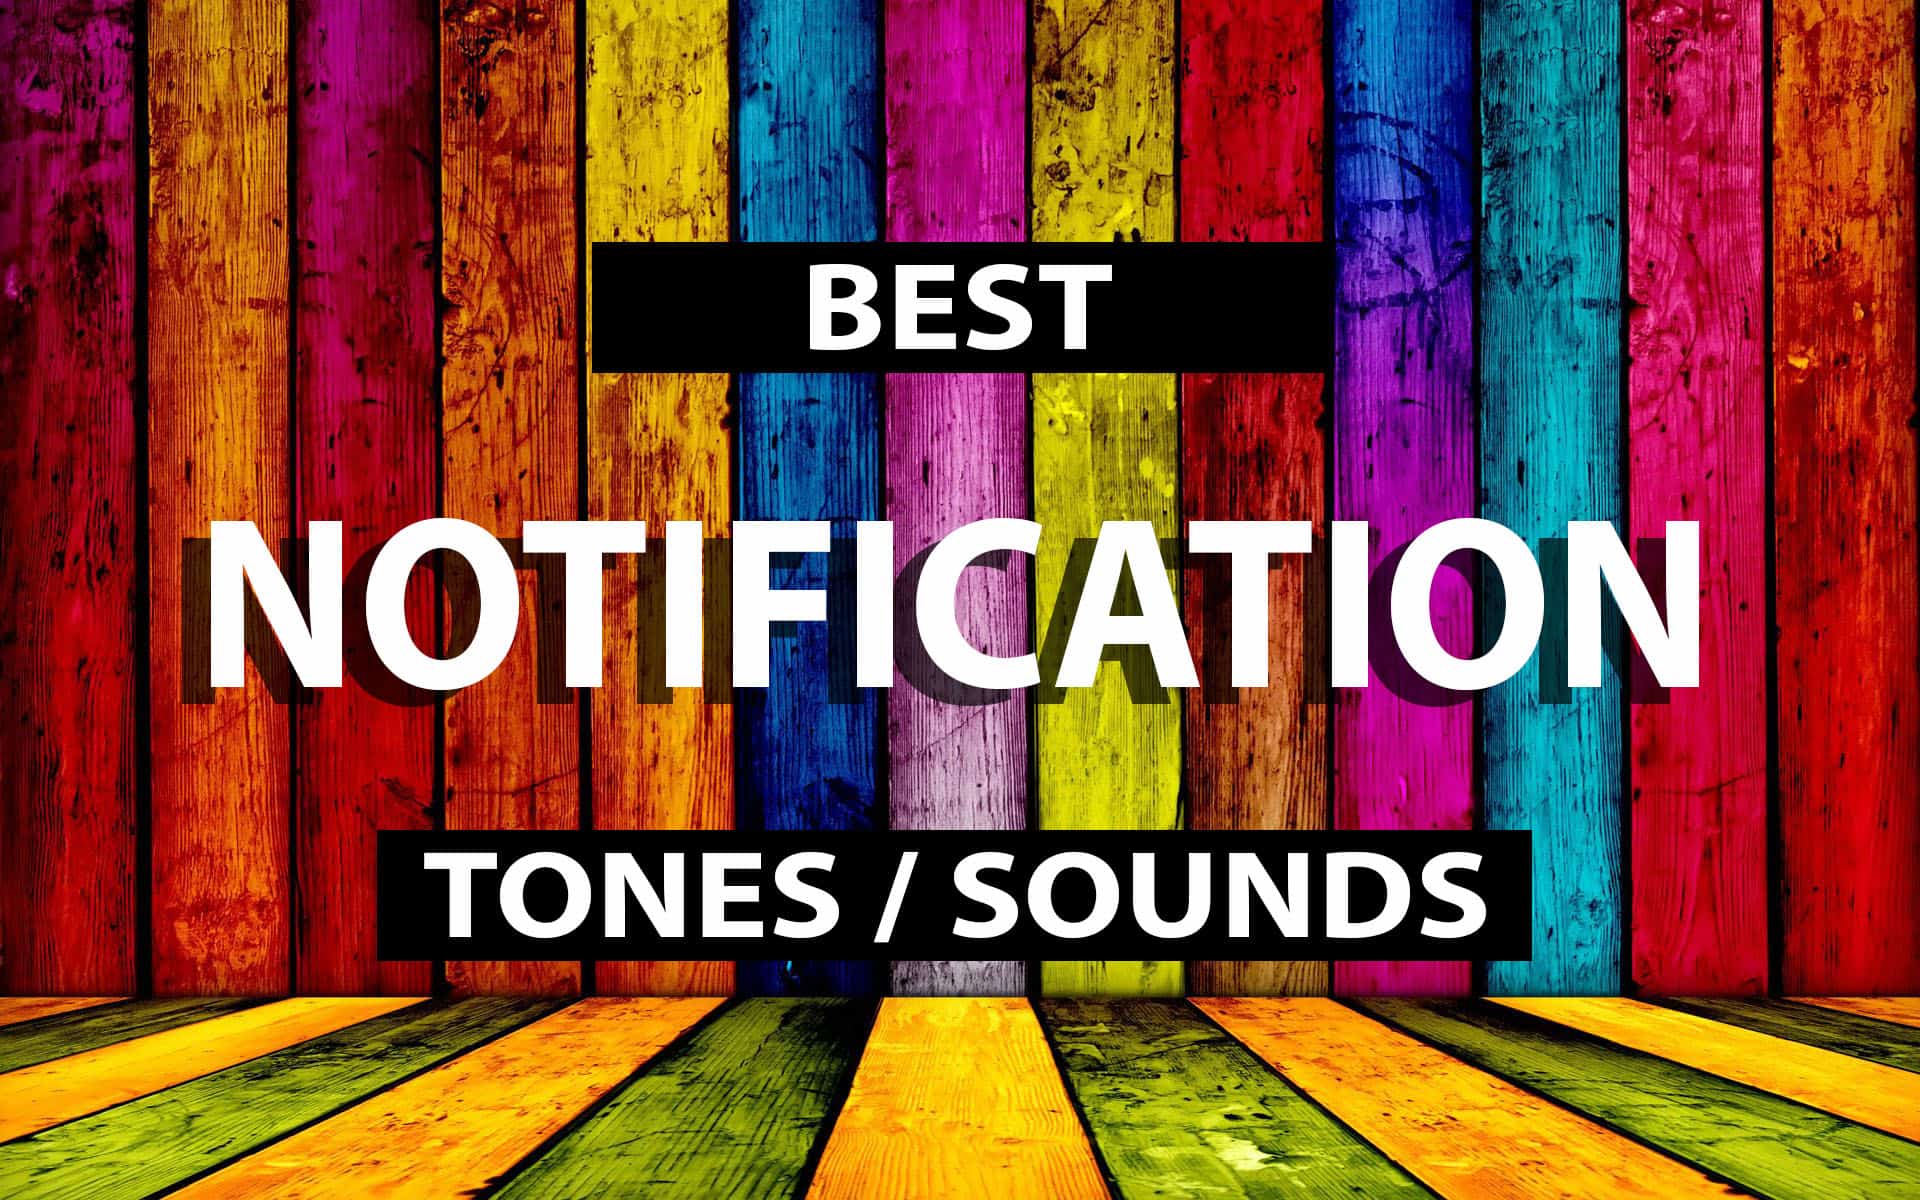 21 Best Notification Tones & Sounds for 2023 - [Download Links] - Oscarmini